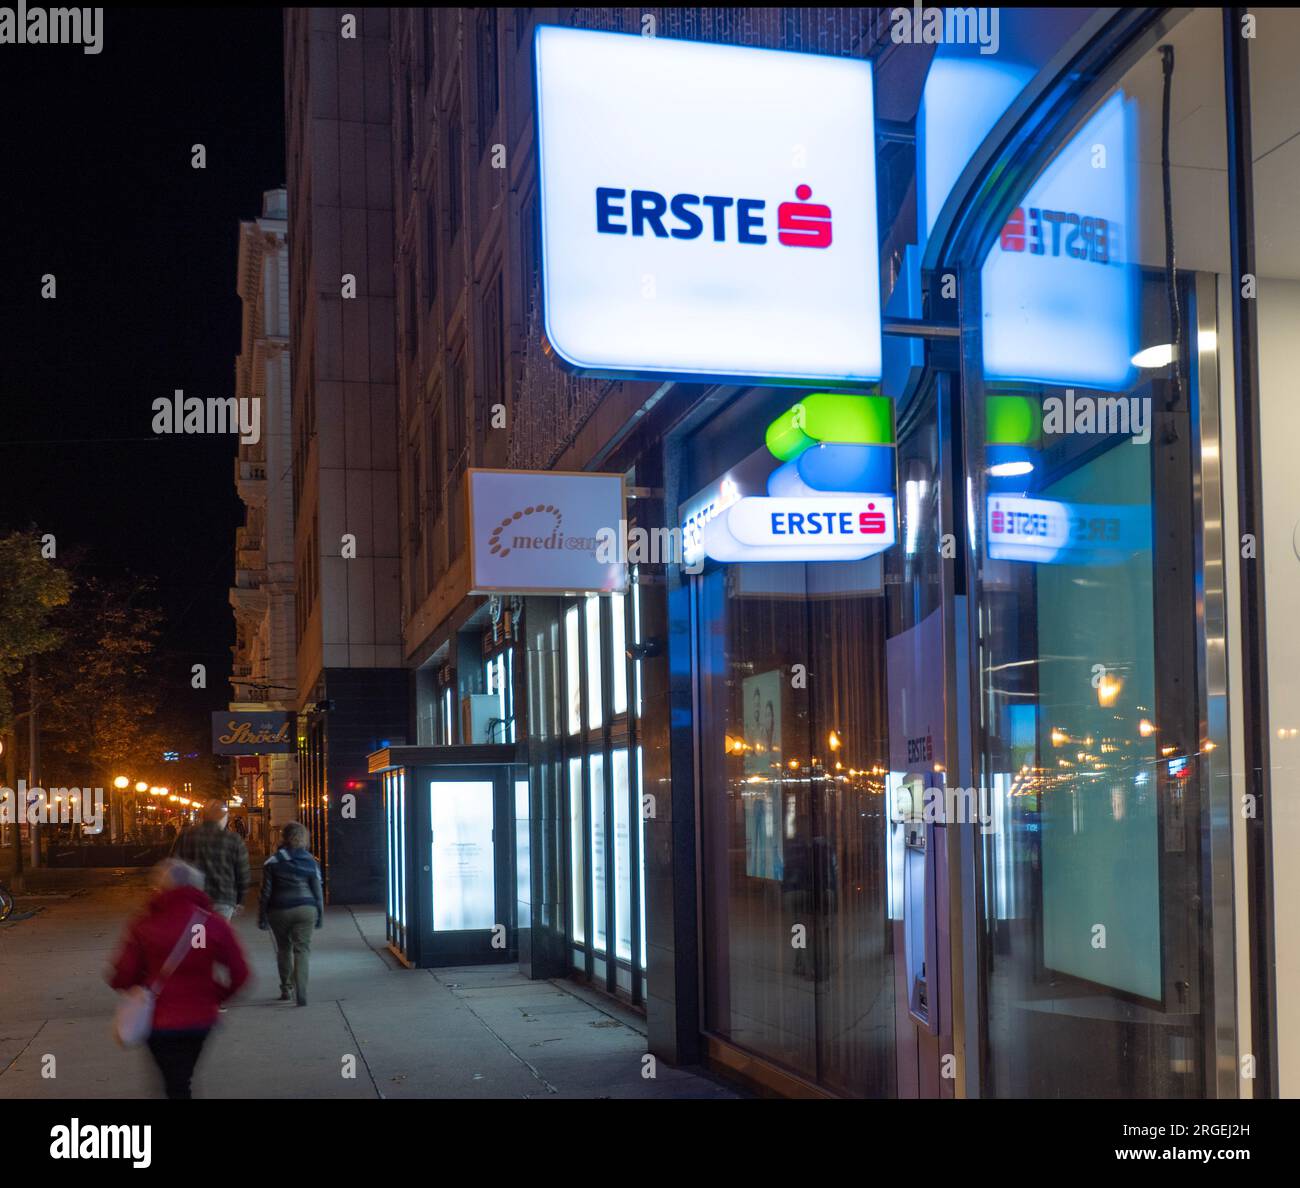 Pedestrians walk past the illuminated shop window of Erste Bank at night Stock Photo